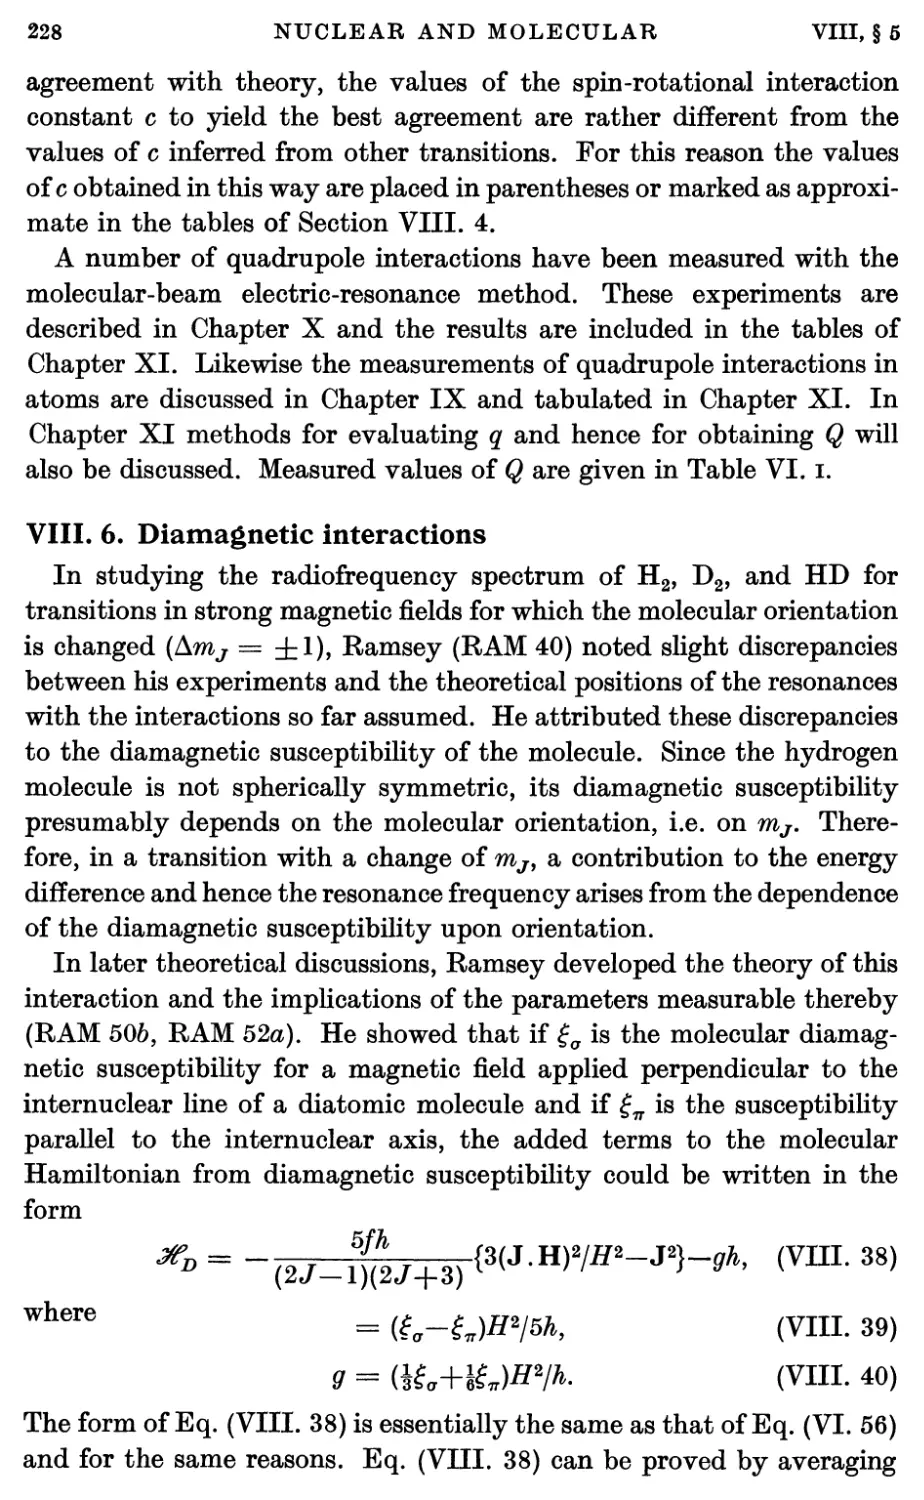 VIII.6. Diamagnetic Interactions